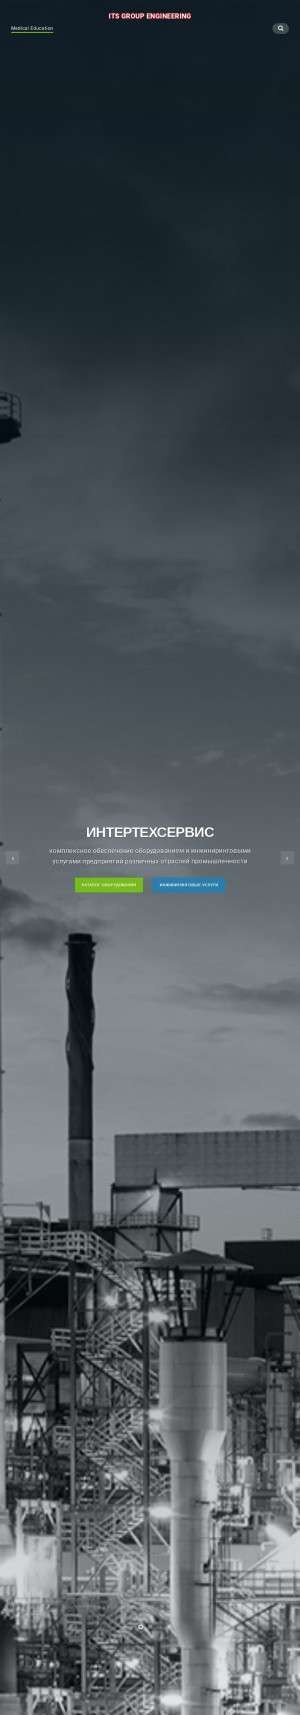 Предпросмотр для its-enggroup.ru — Интертехсервис